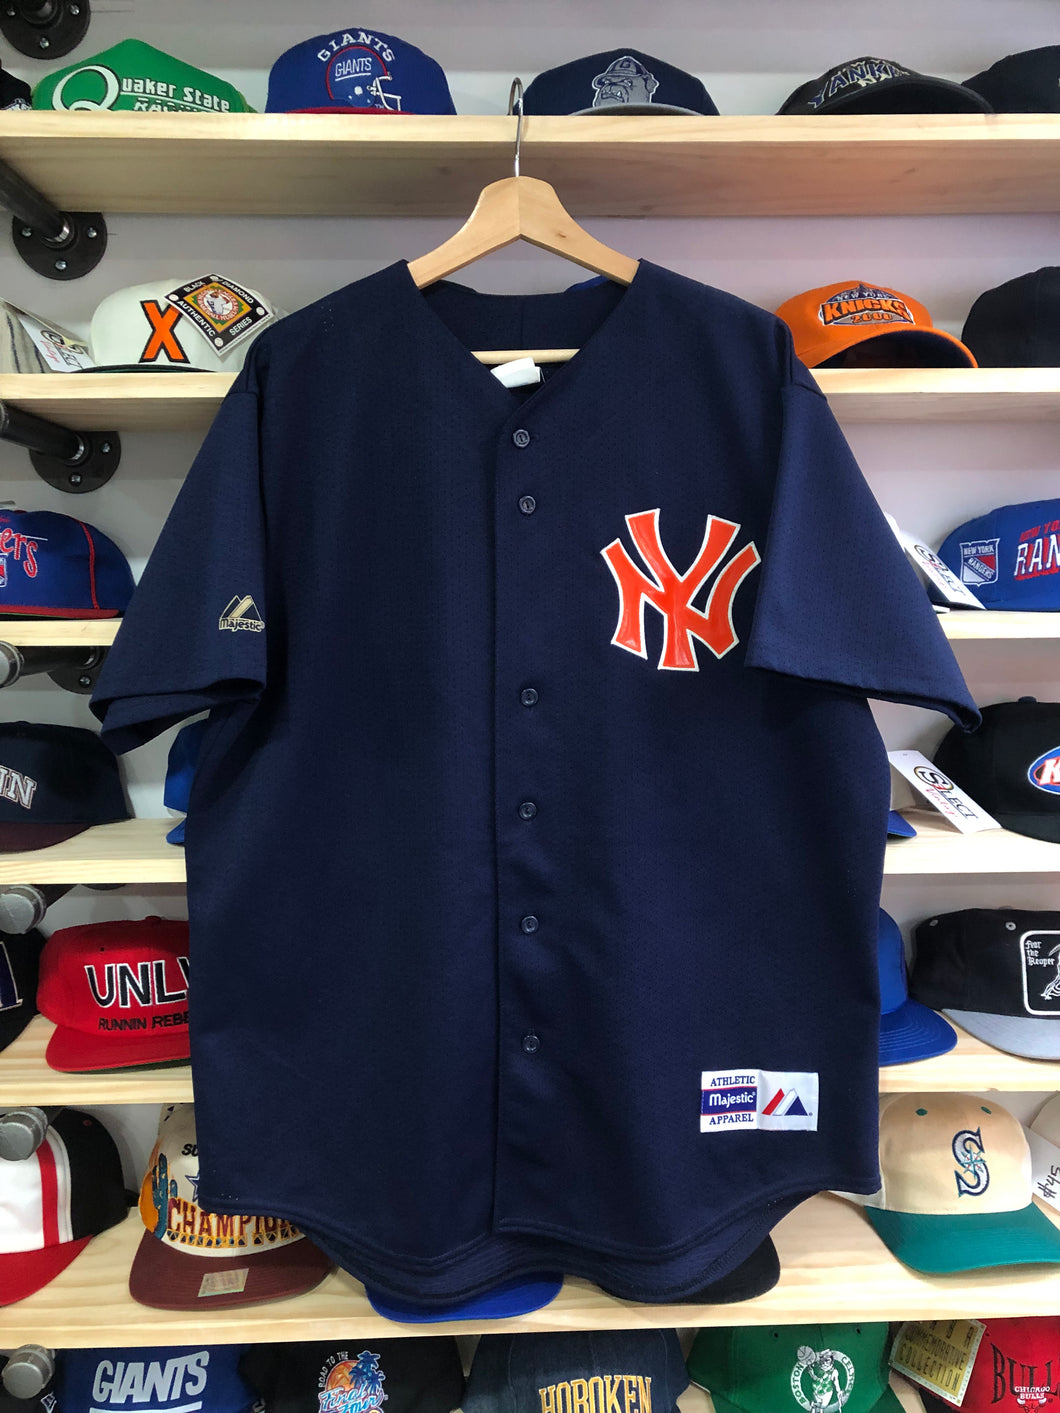 Vintage Majestic MLB New York Yankees Patent Leather Logo Jersey Size Large